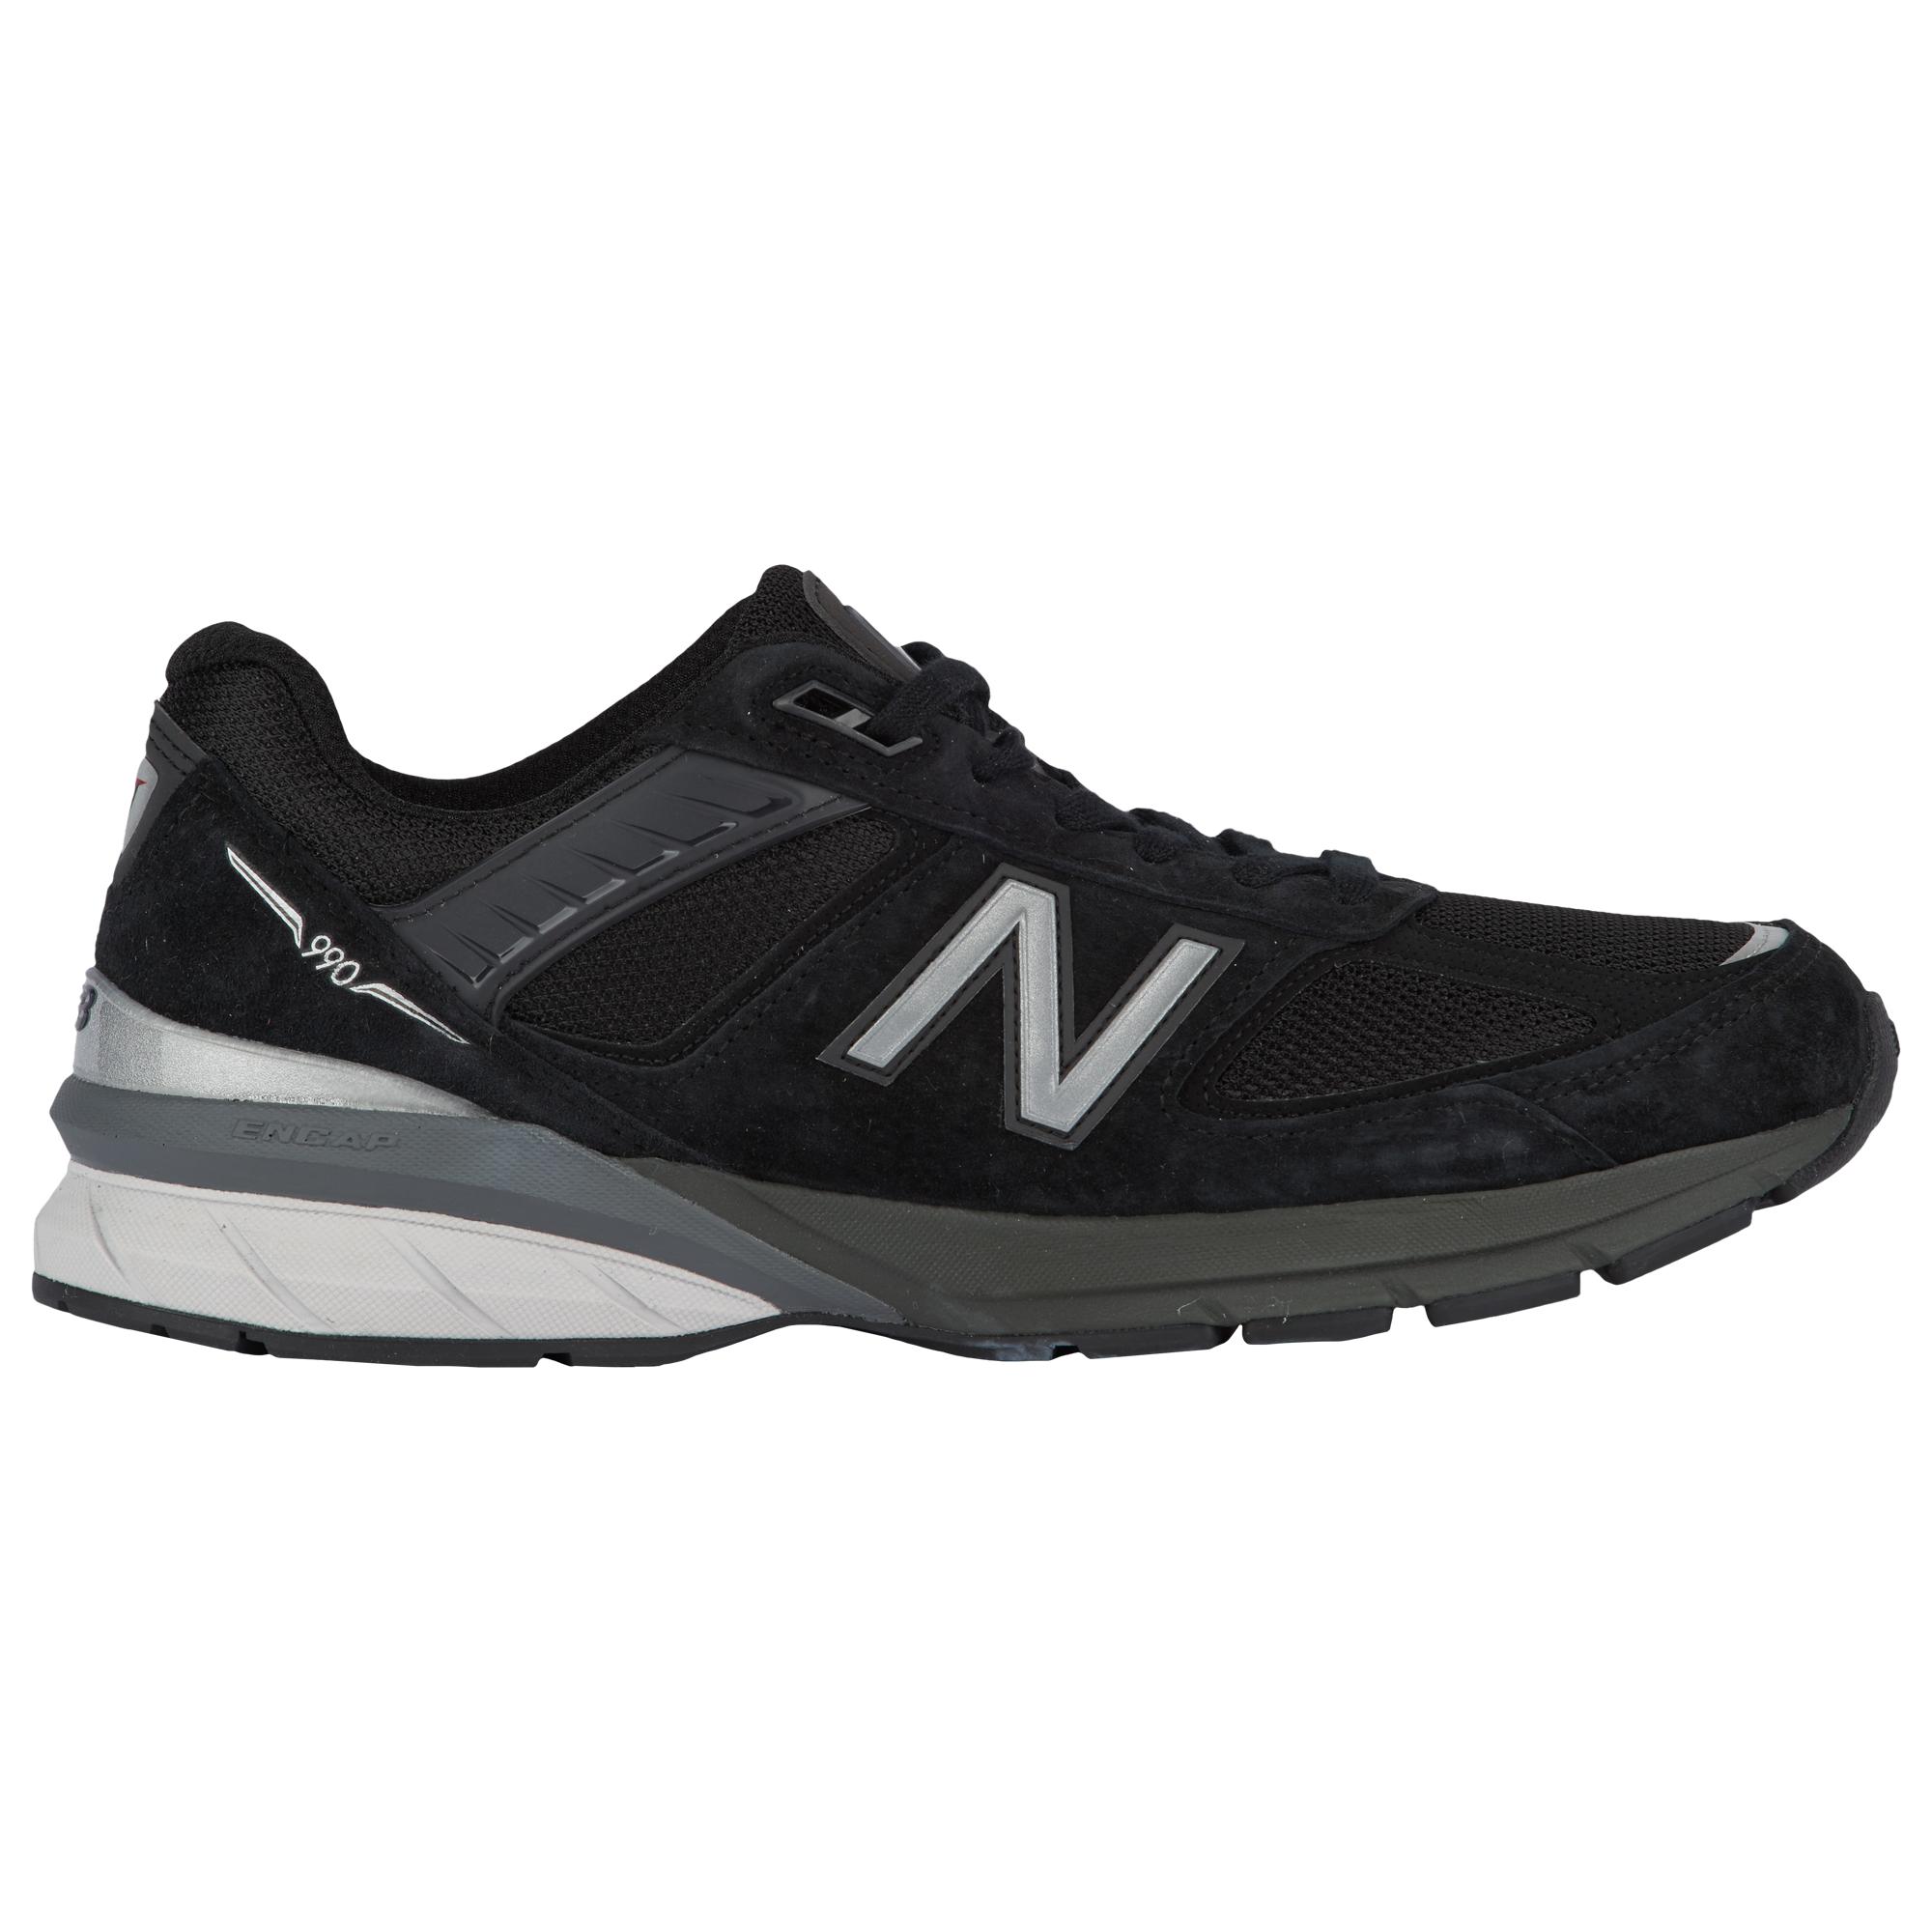 New Balance 990v5 Running Shoes in Black for Men - Lyst